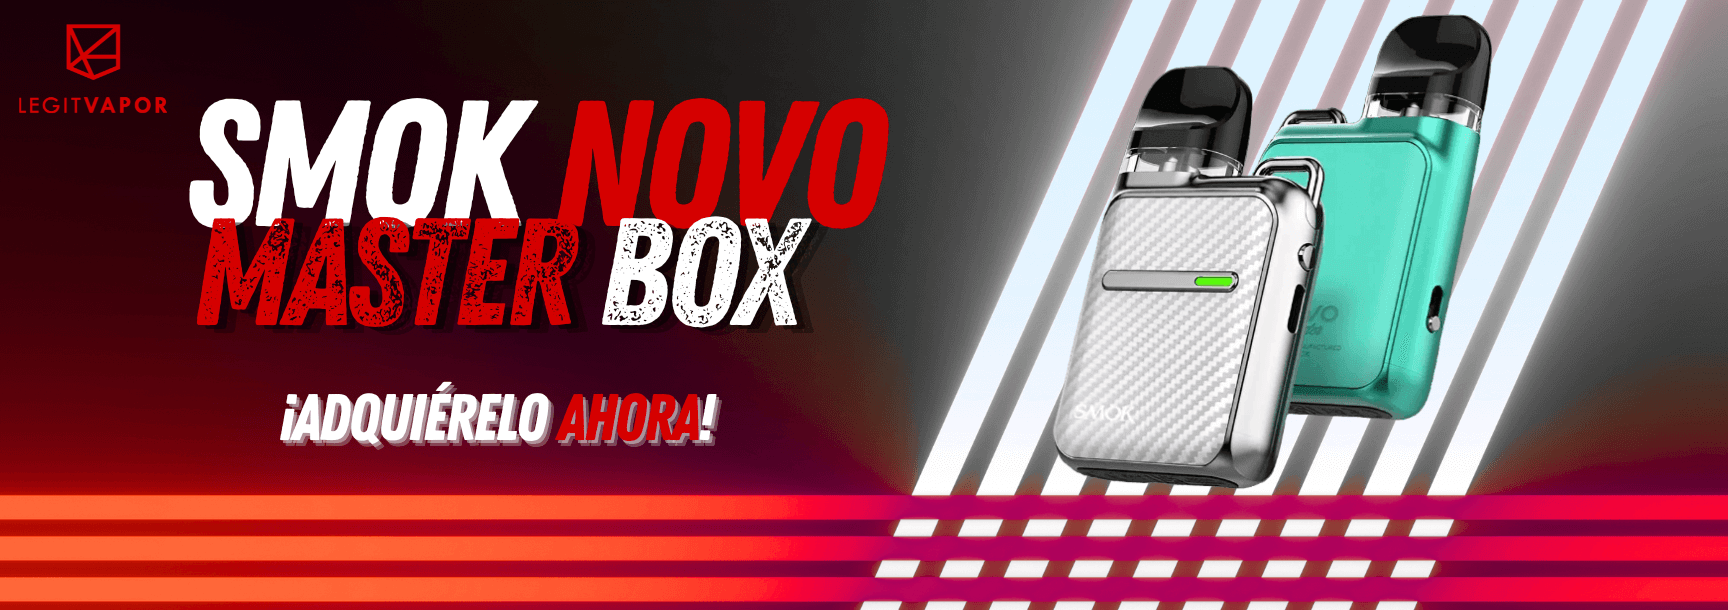 Smok Novo Master Box Kit Home Slider